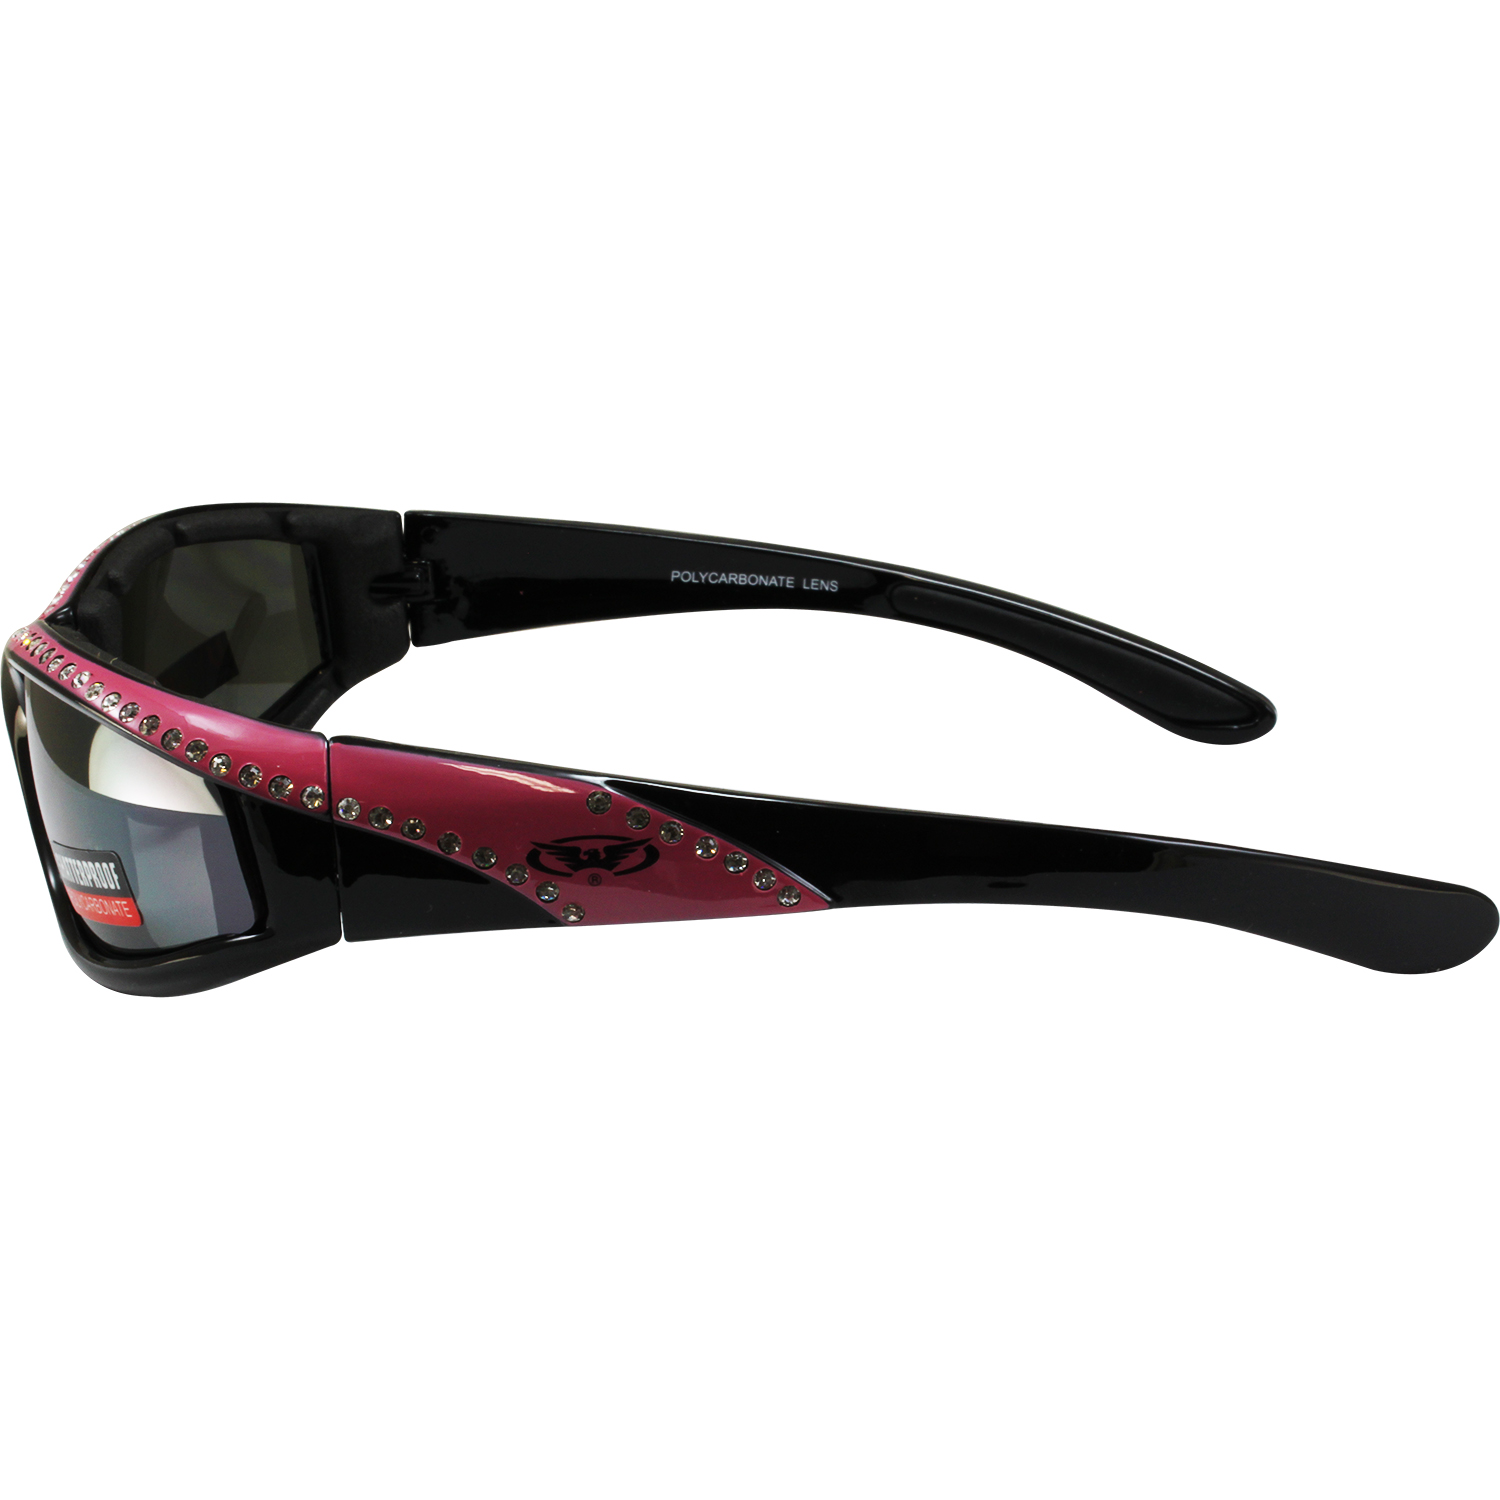 2 Pairs of Global Vision Eyewear Marilyn 11 Women's Black Sunglasses Pink + Orange Stripe Frames Flash Mirror Lenses - image 4 of 9